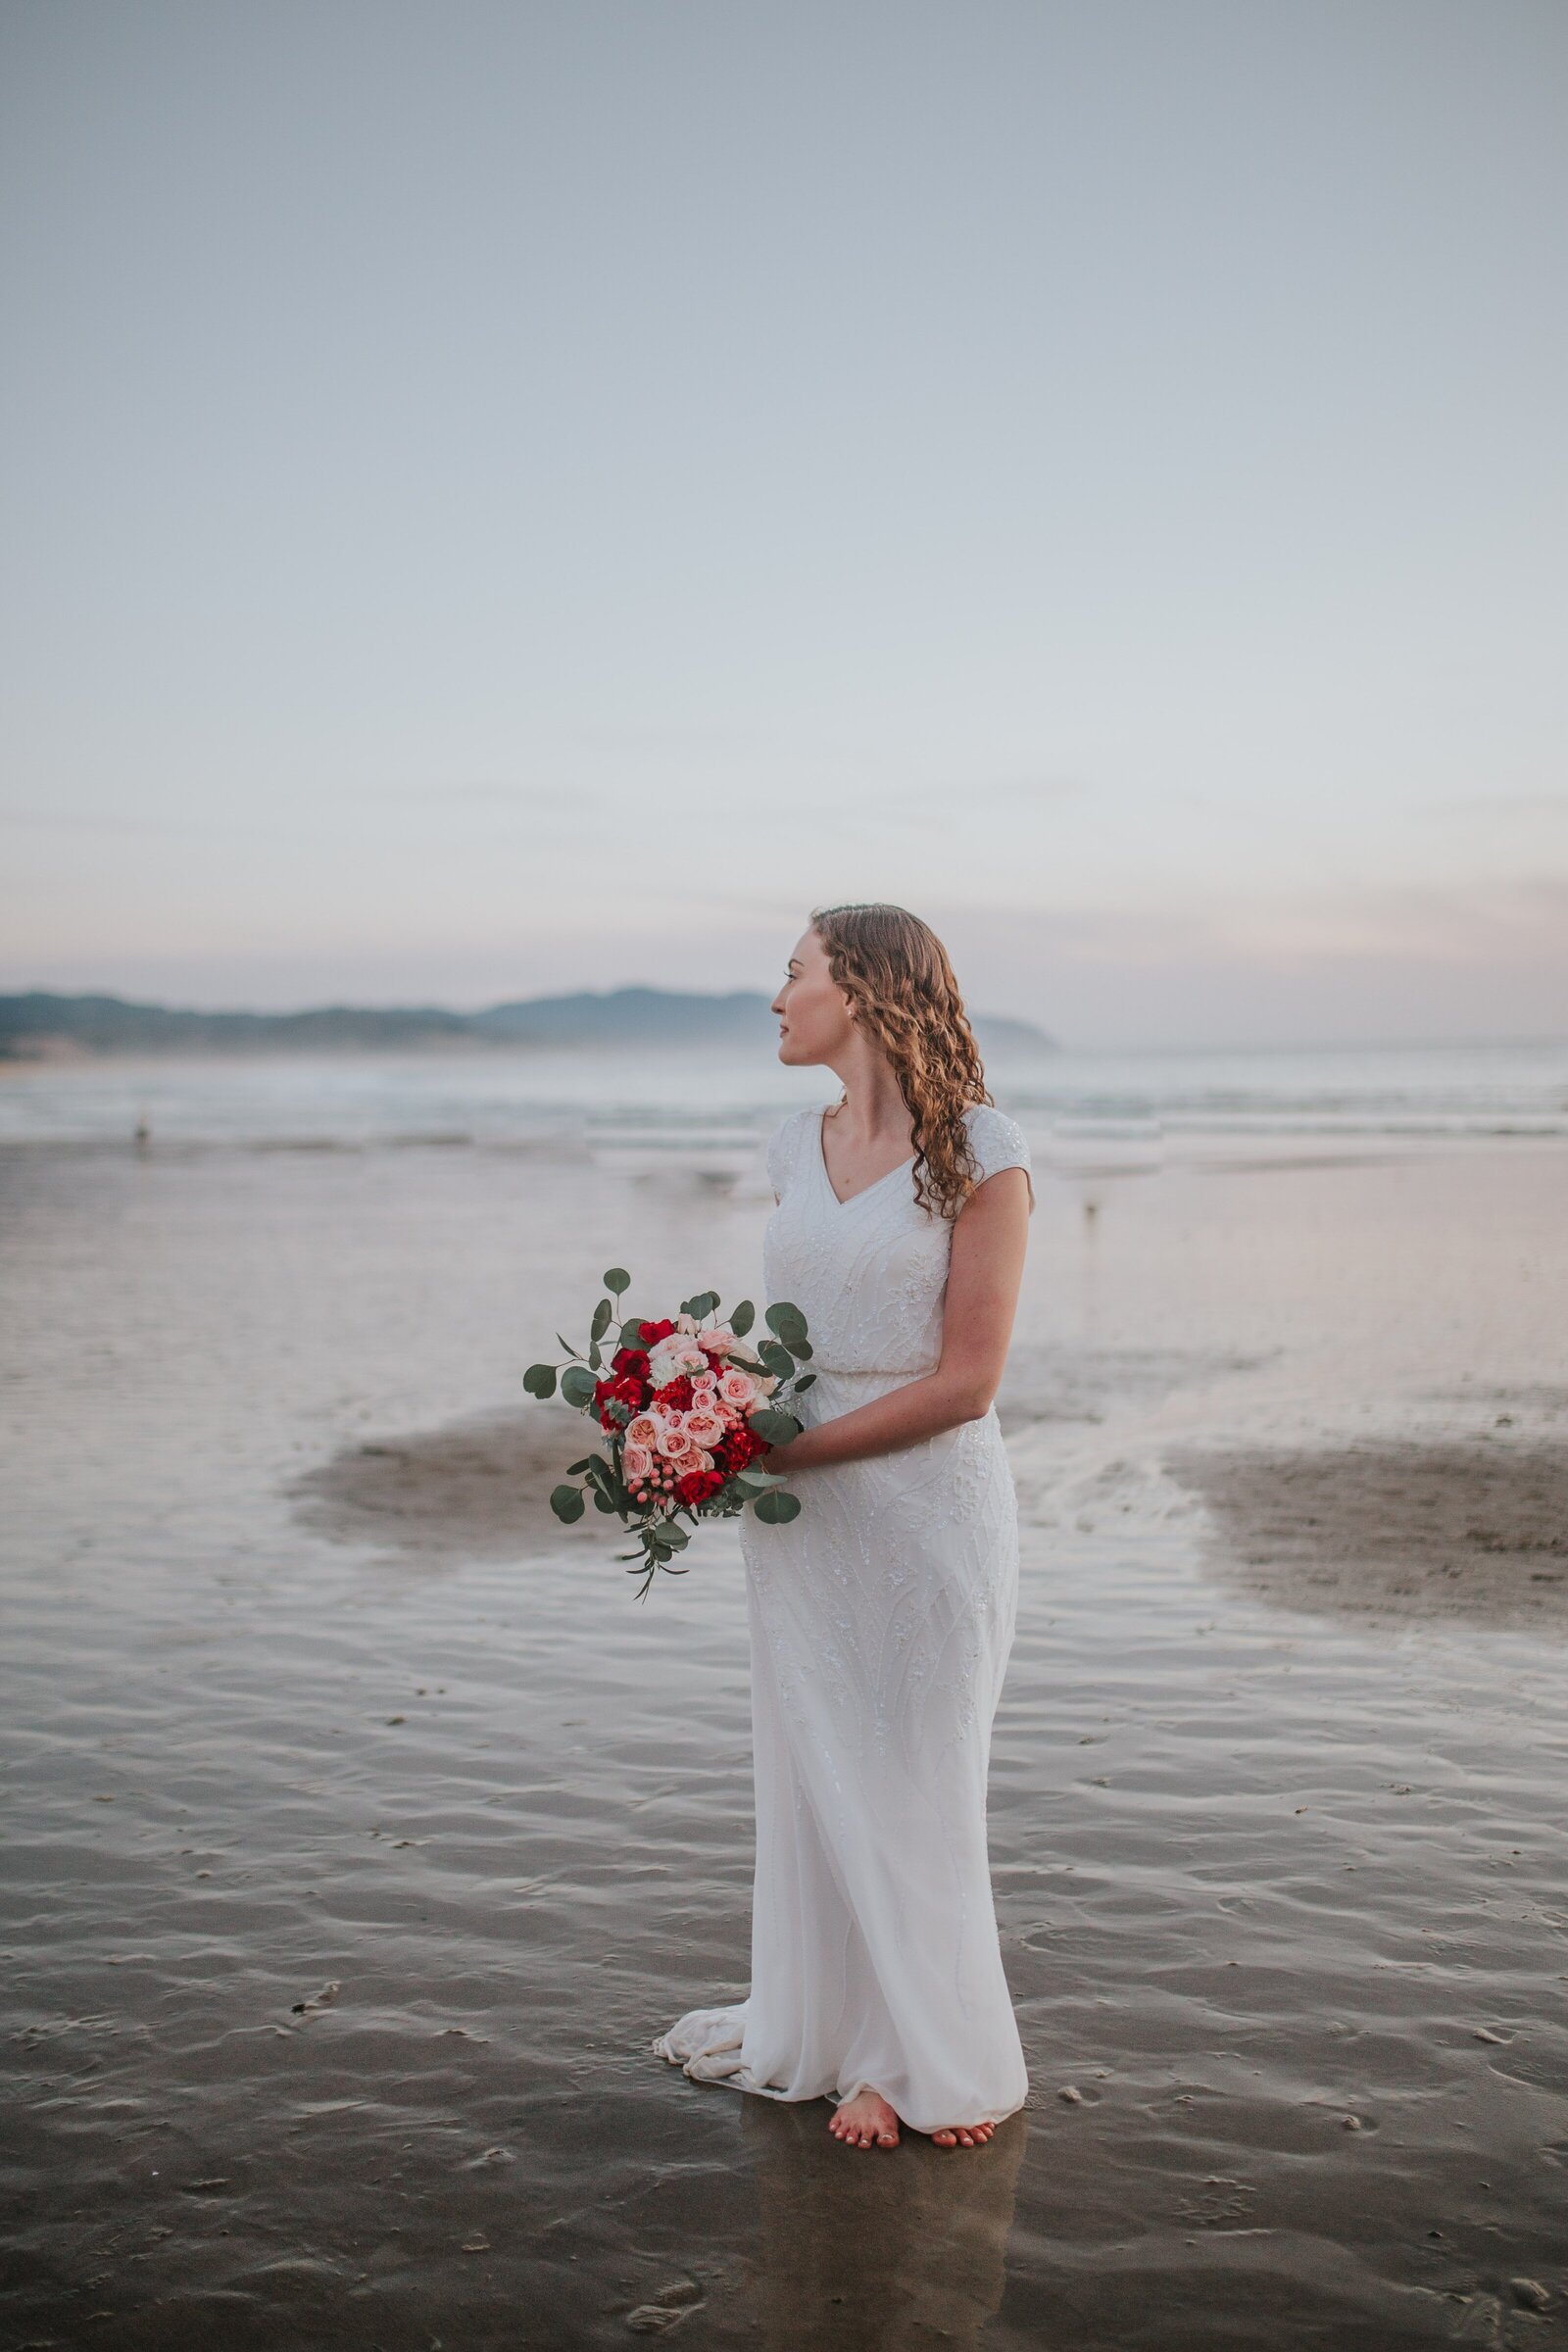 Sacramento Wedding Photographer captures beach wedding with bride standing barefoot on beach